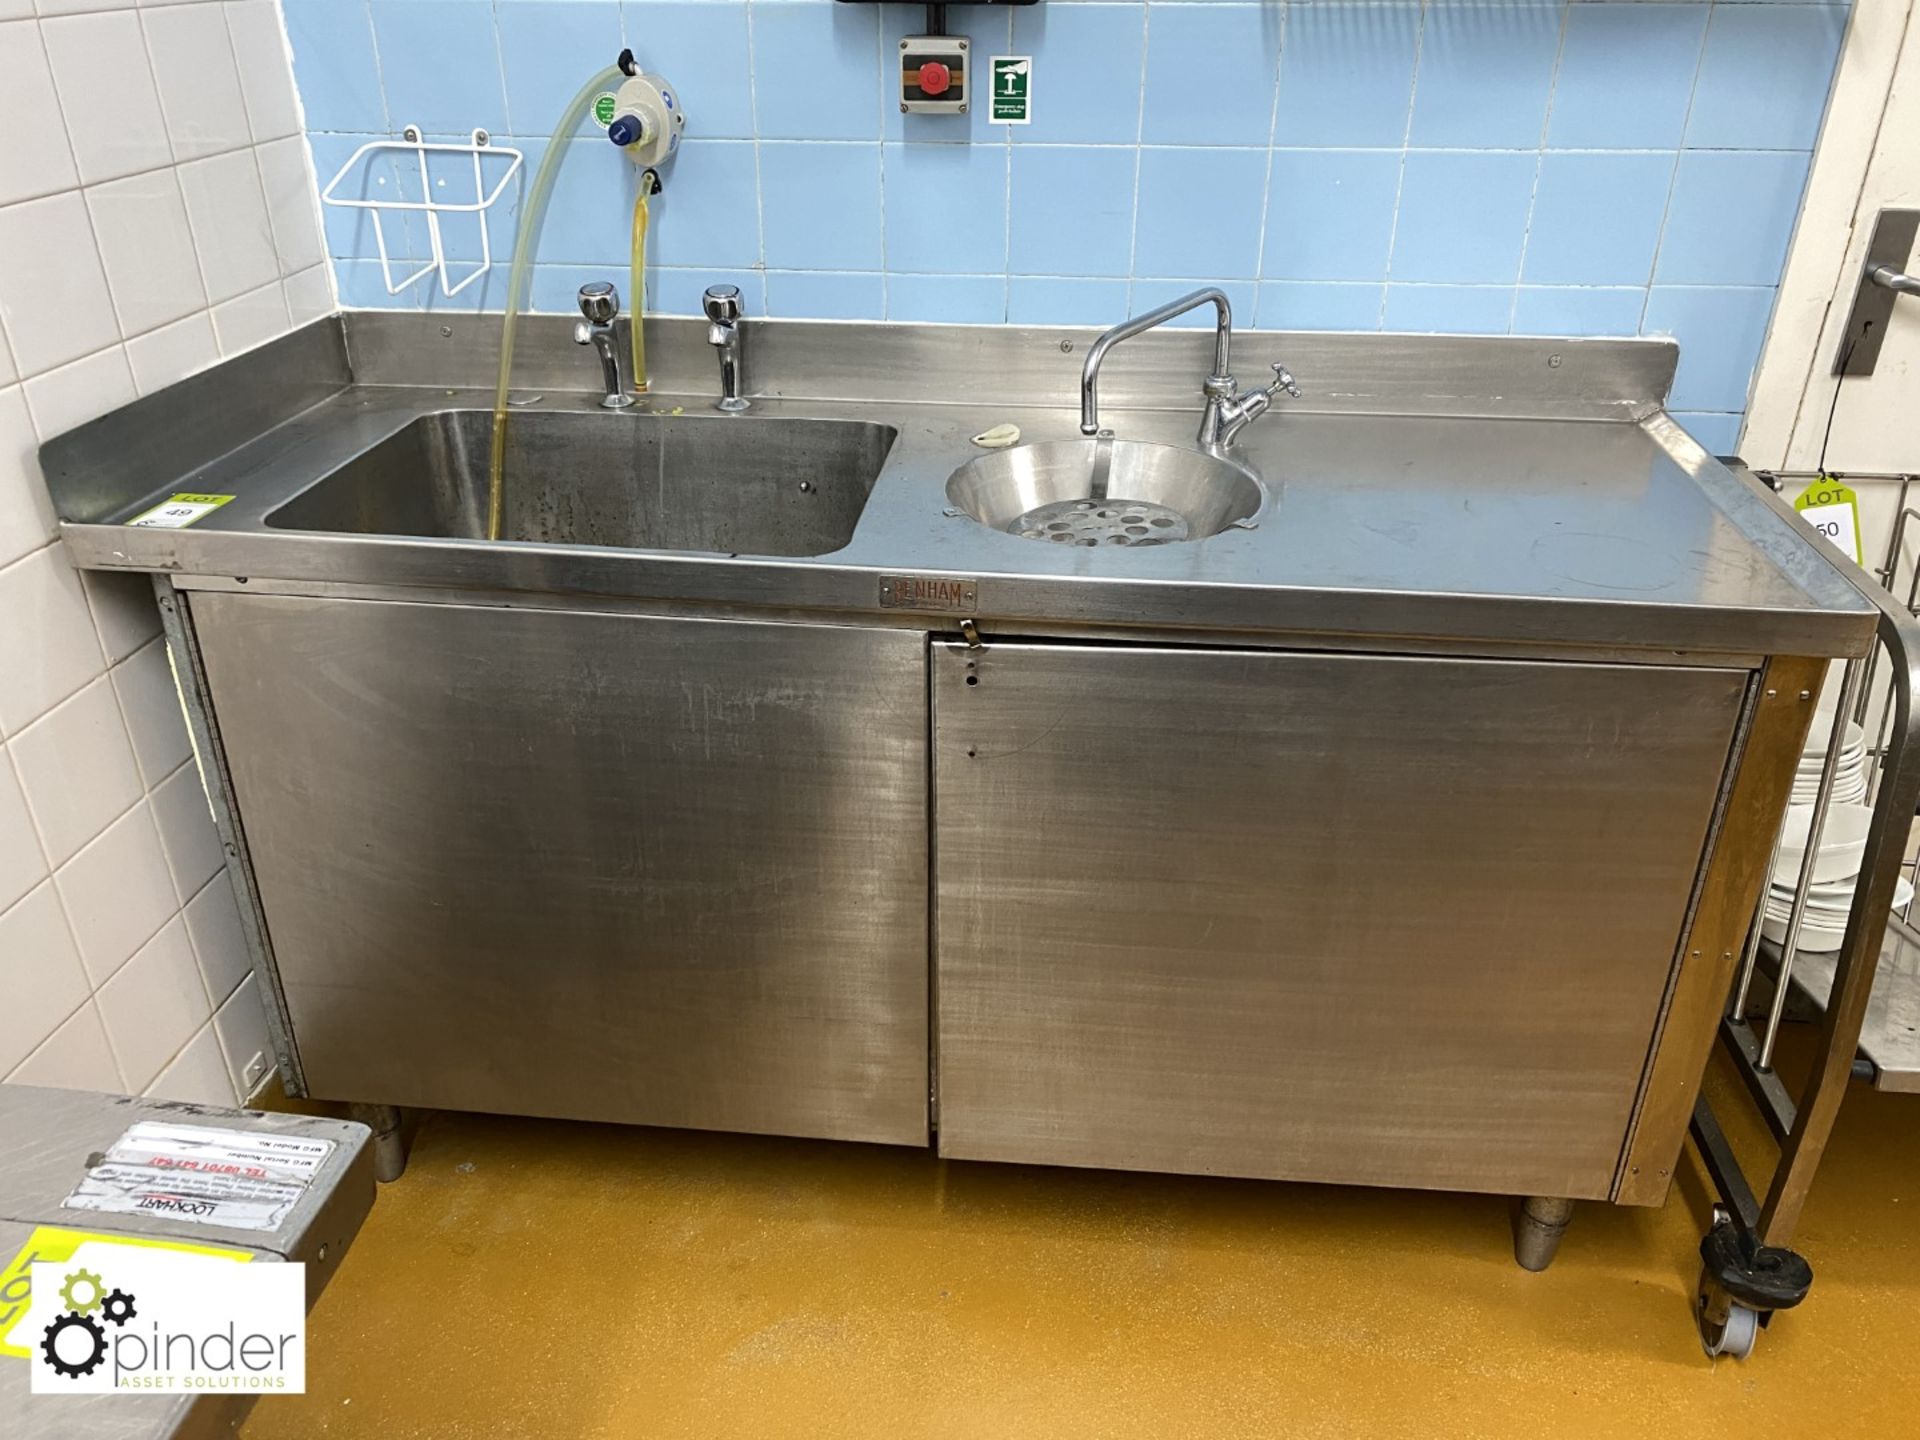 Benham stainless steel single bowl Sink Unit, 1700mm x 600mm (located in Main Kitchen)